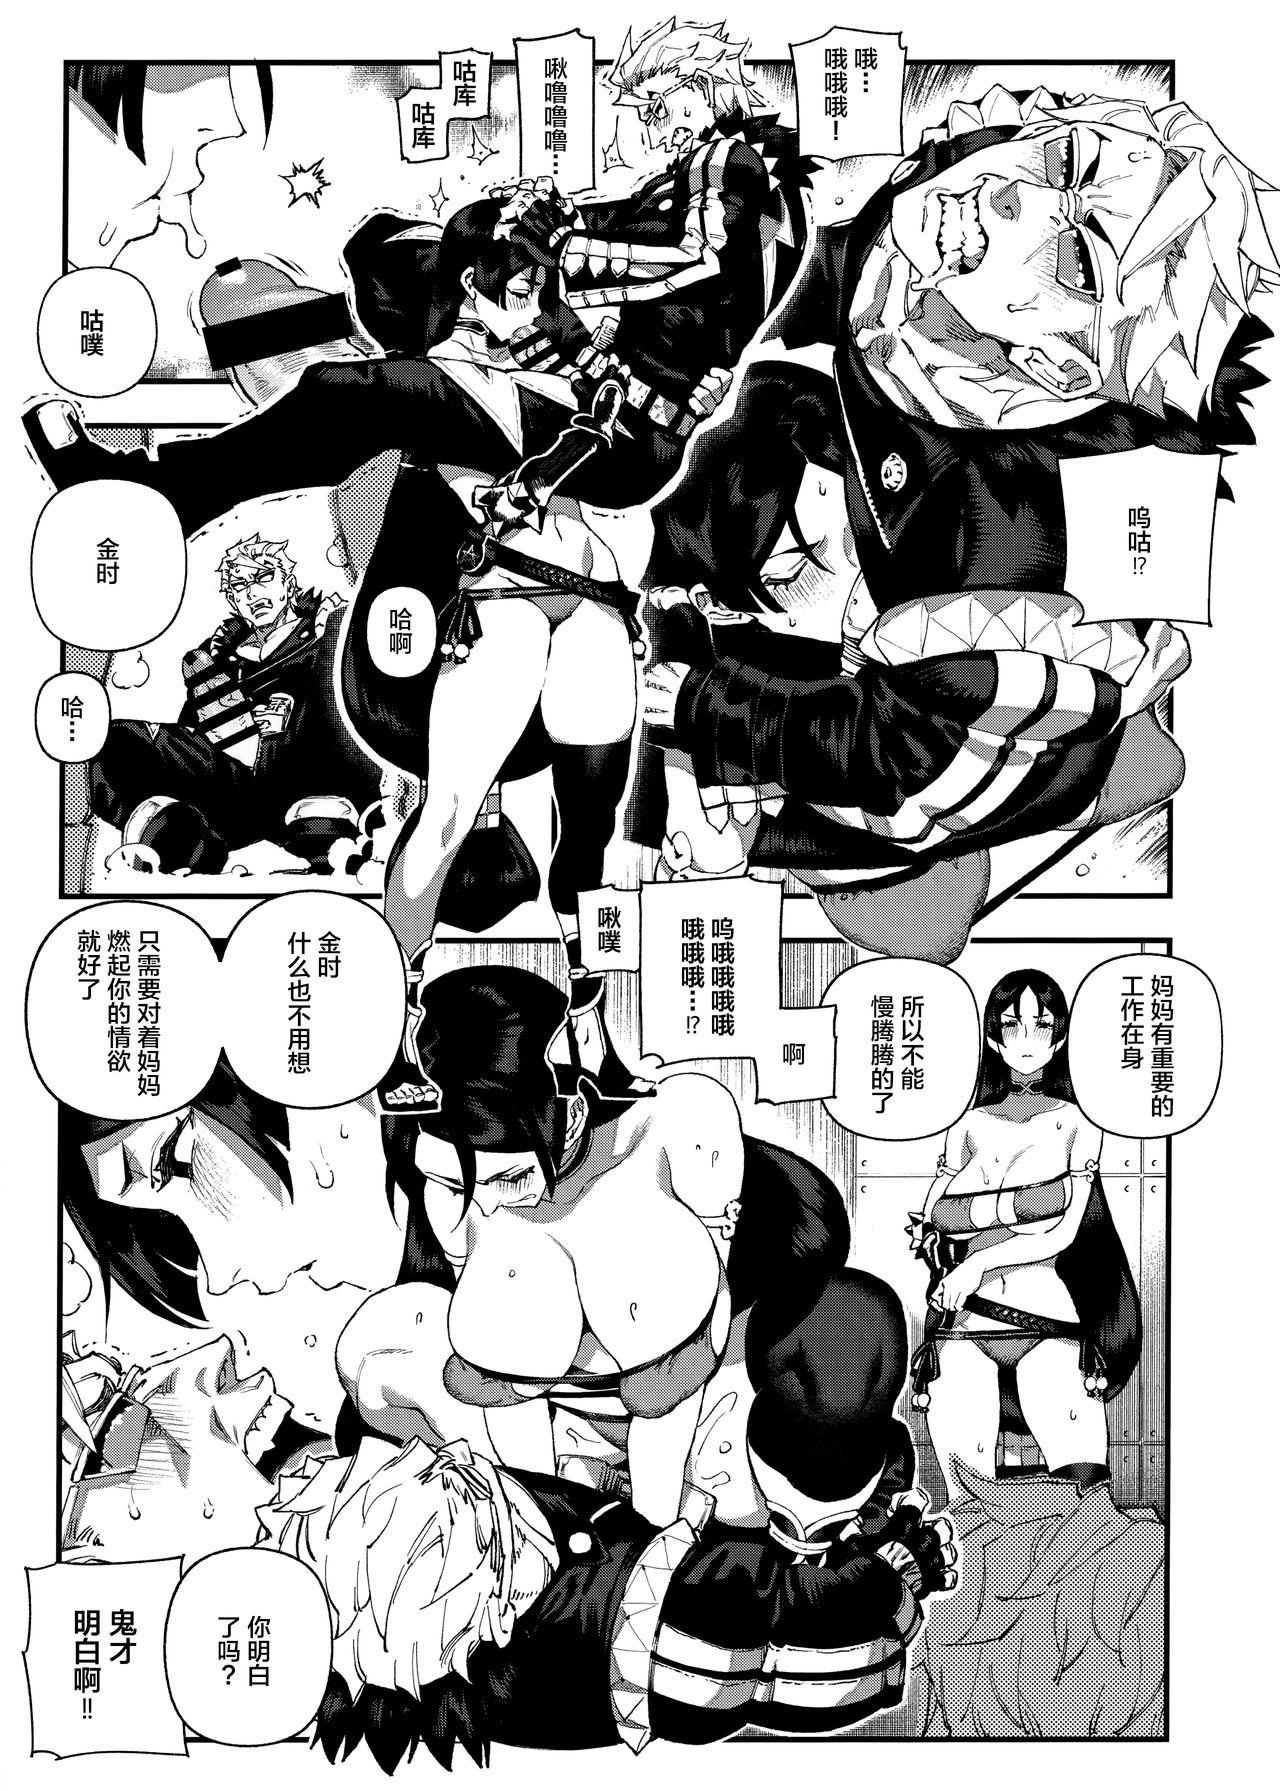 Sucking Dick CHALDEA MANIA - Minamoto no Raikou - Fate grand order Women Sucking Dick - Page 8